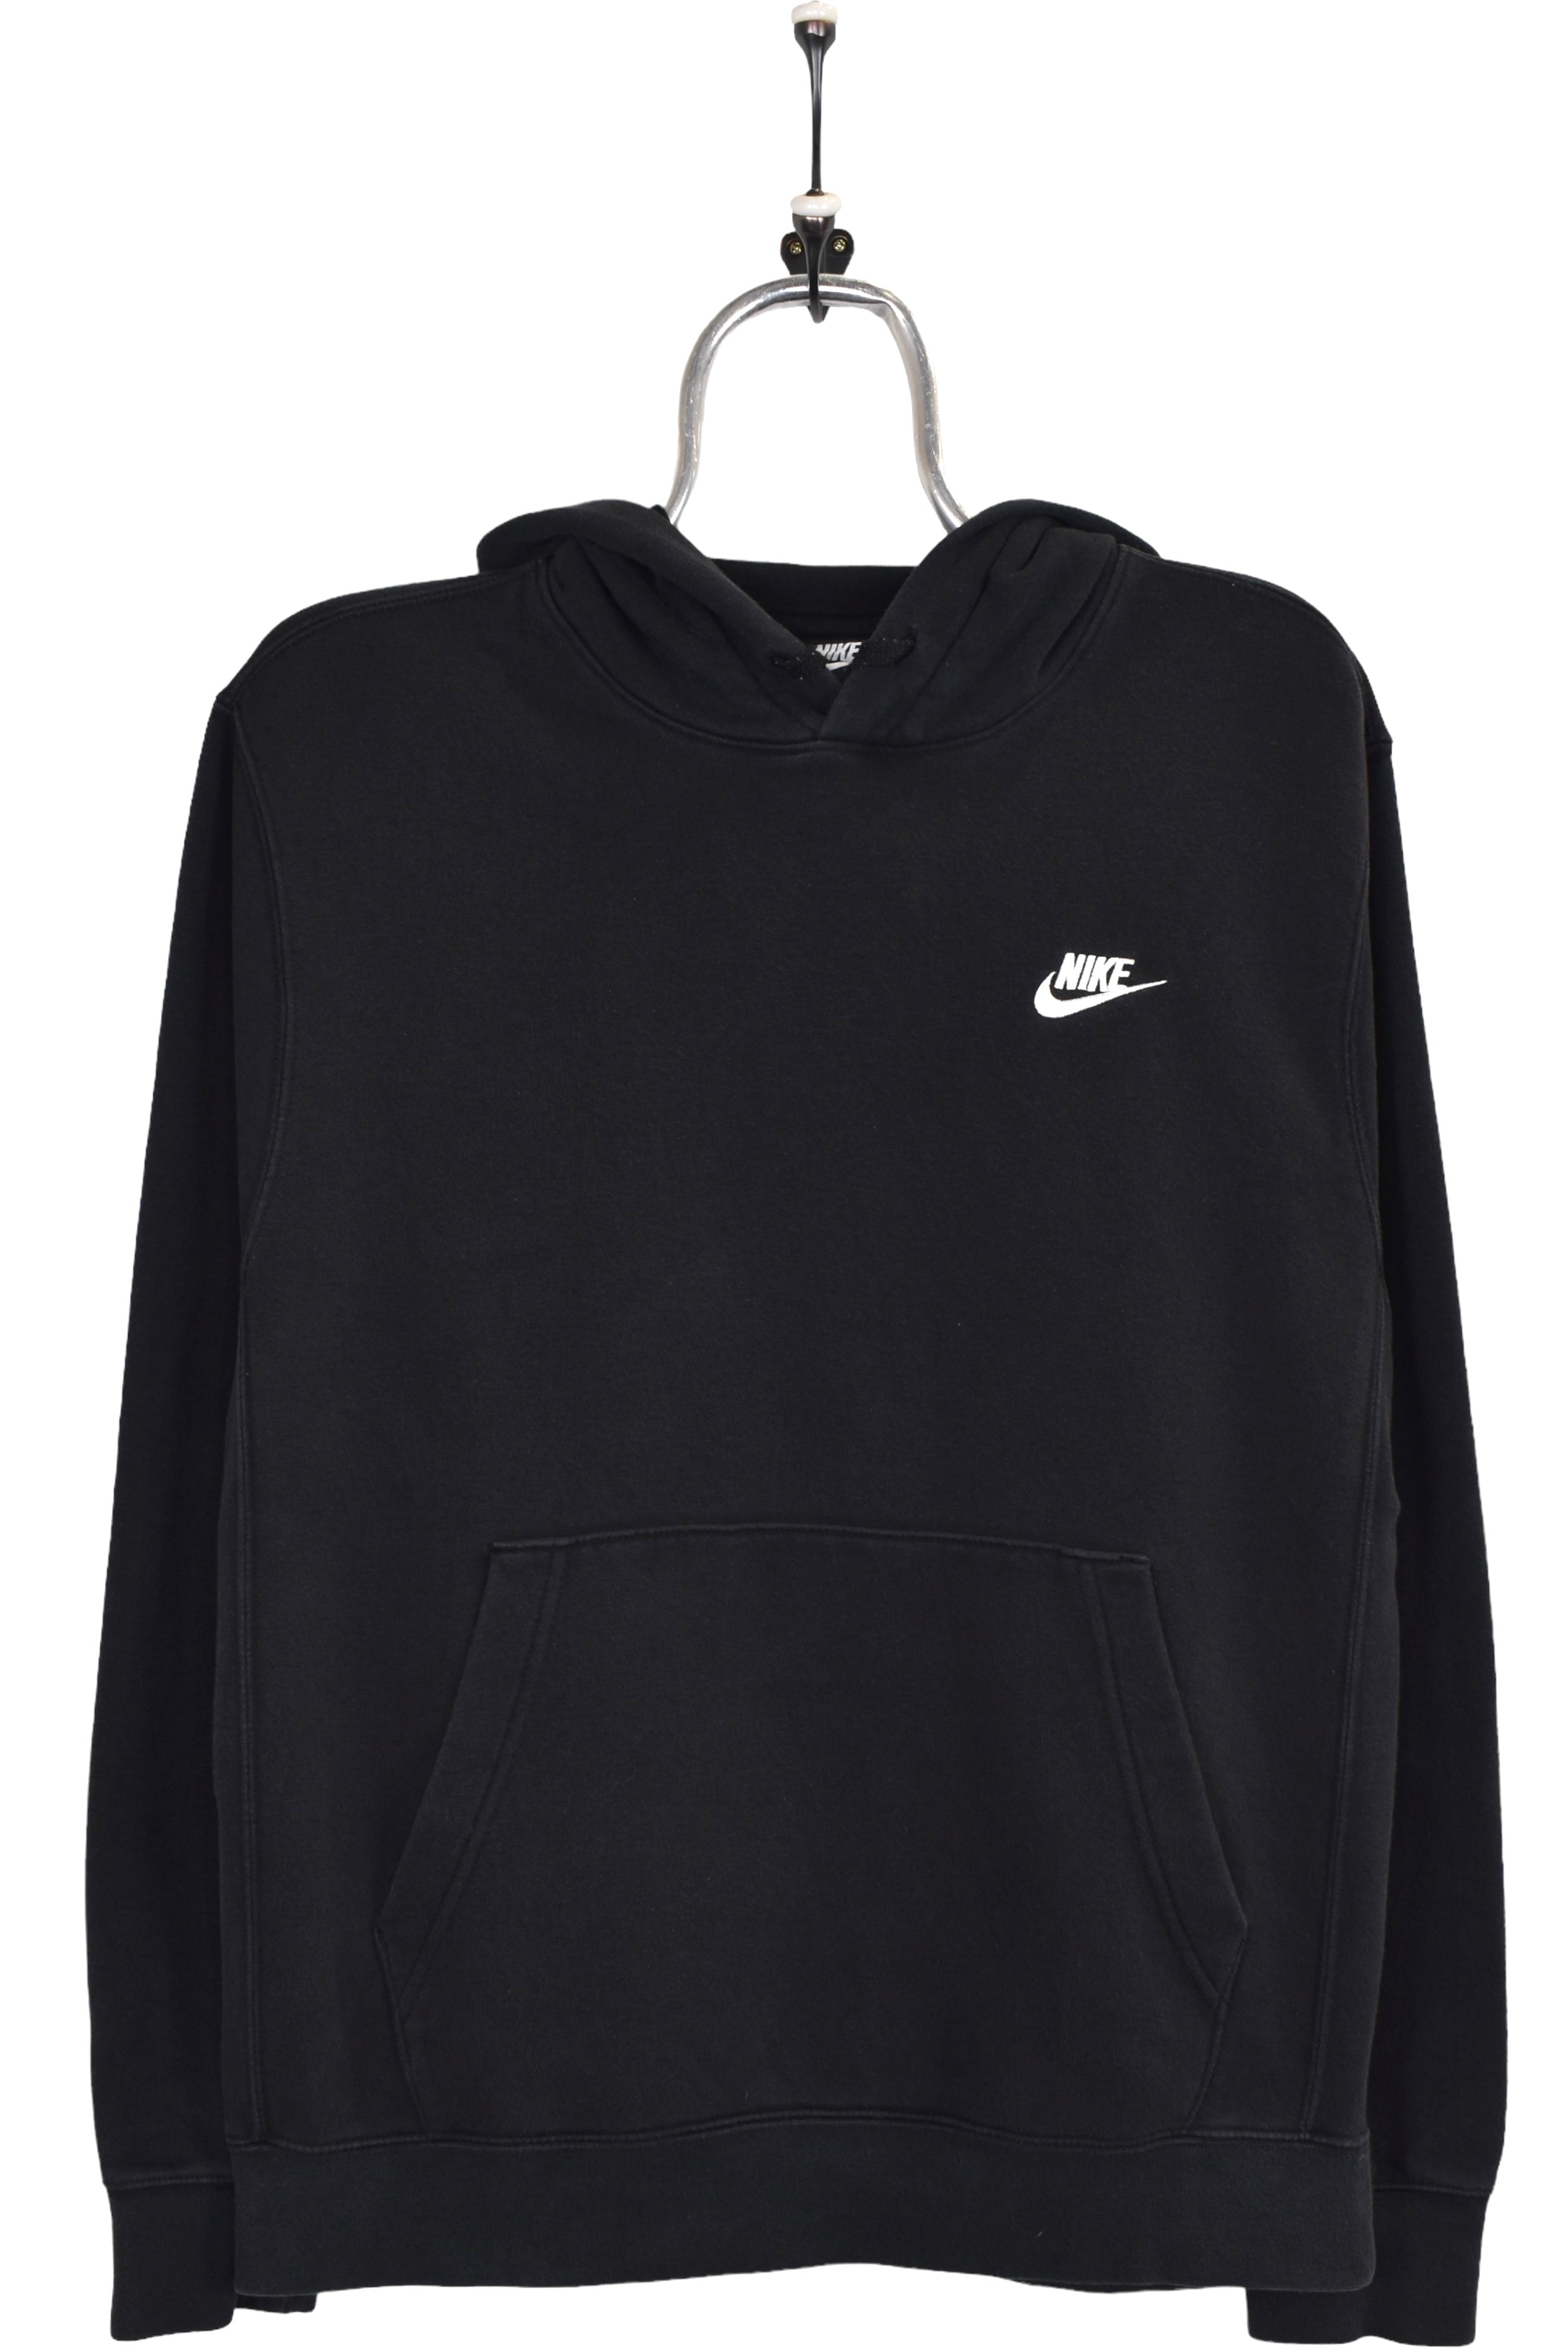 Vintage Nike hoodie, black embroidered sweatshirt - Small